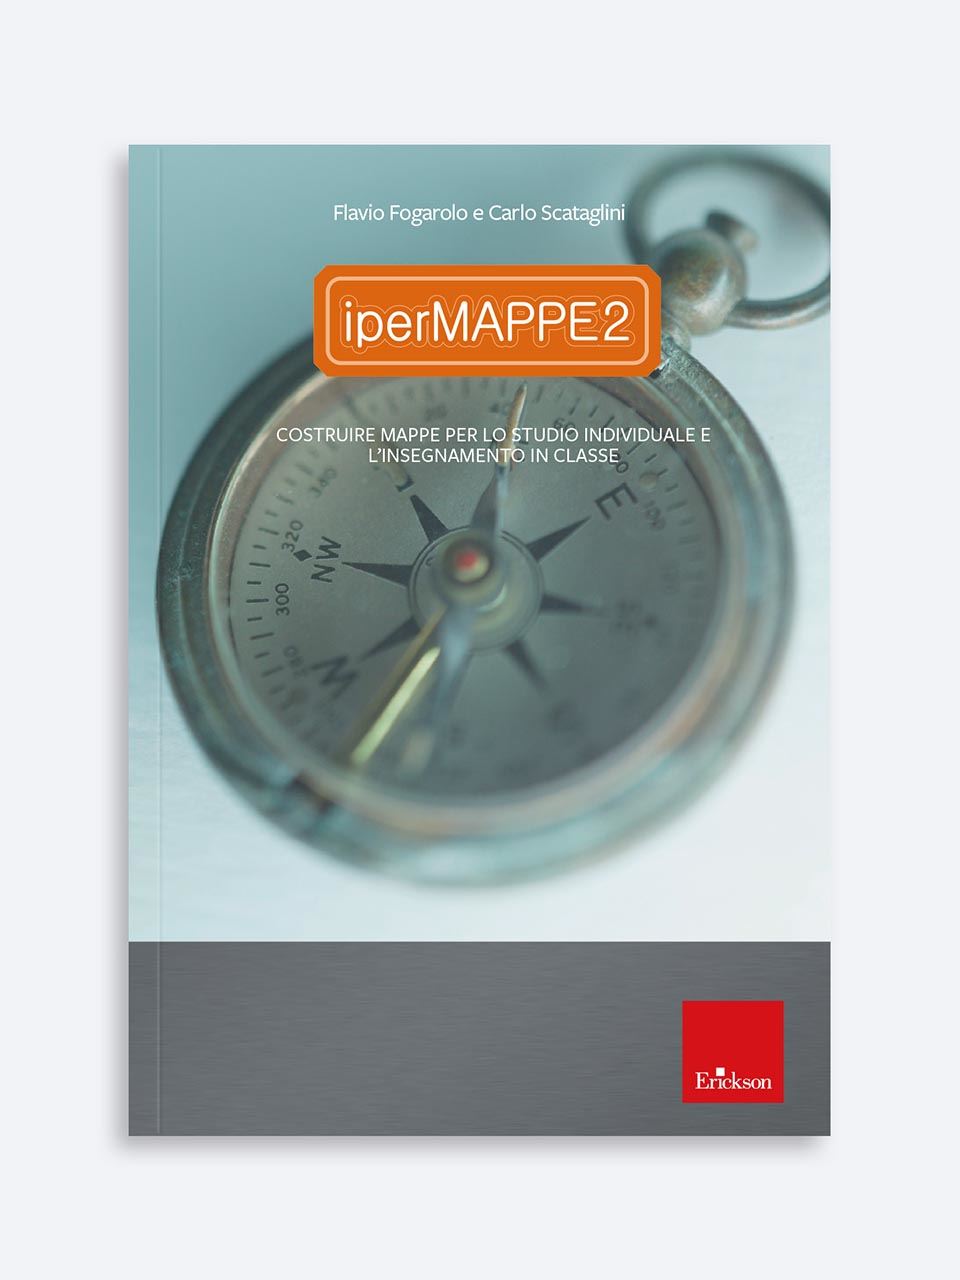 IperMAPPE 2 (Software) - App e software - Erickson 2